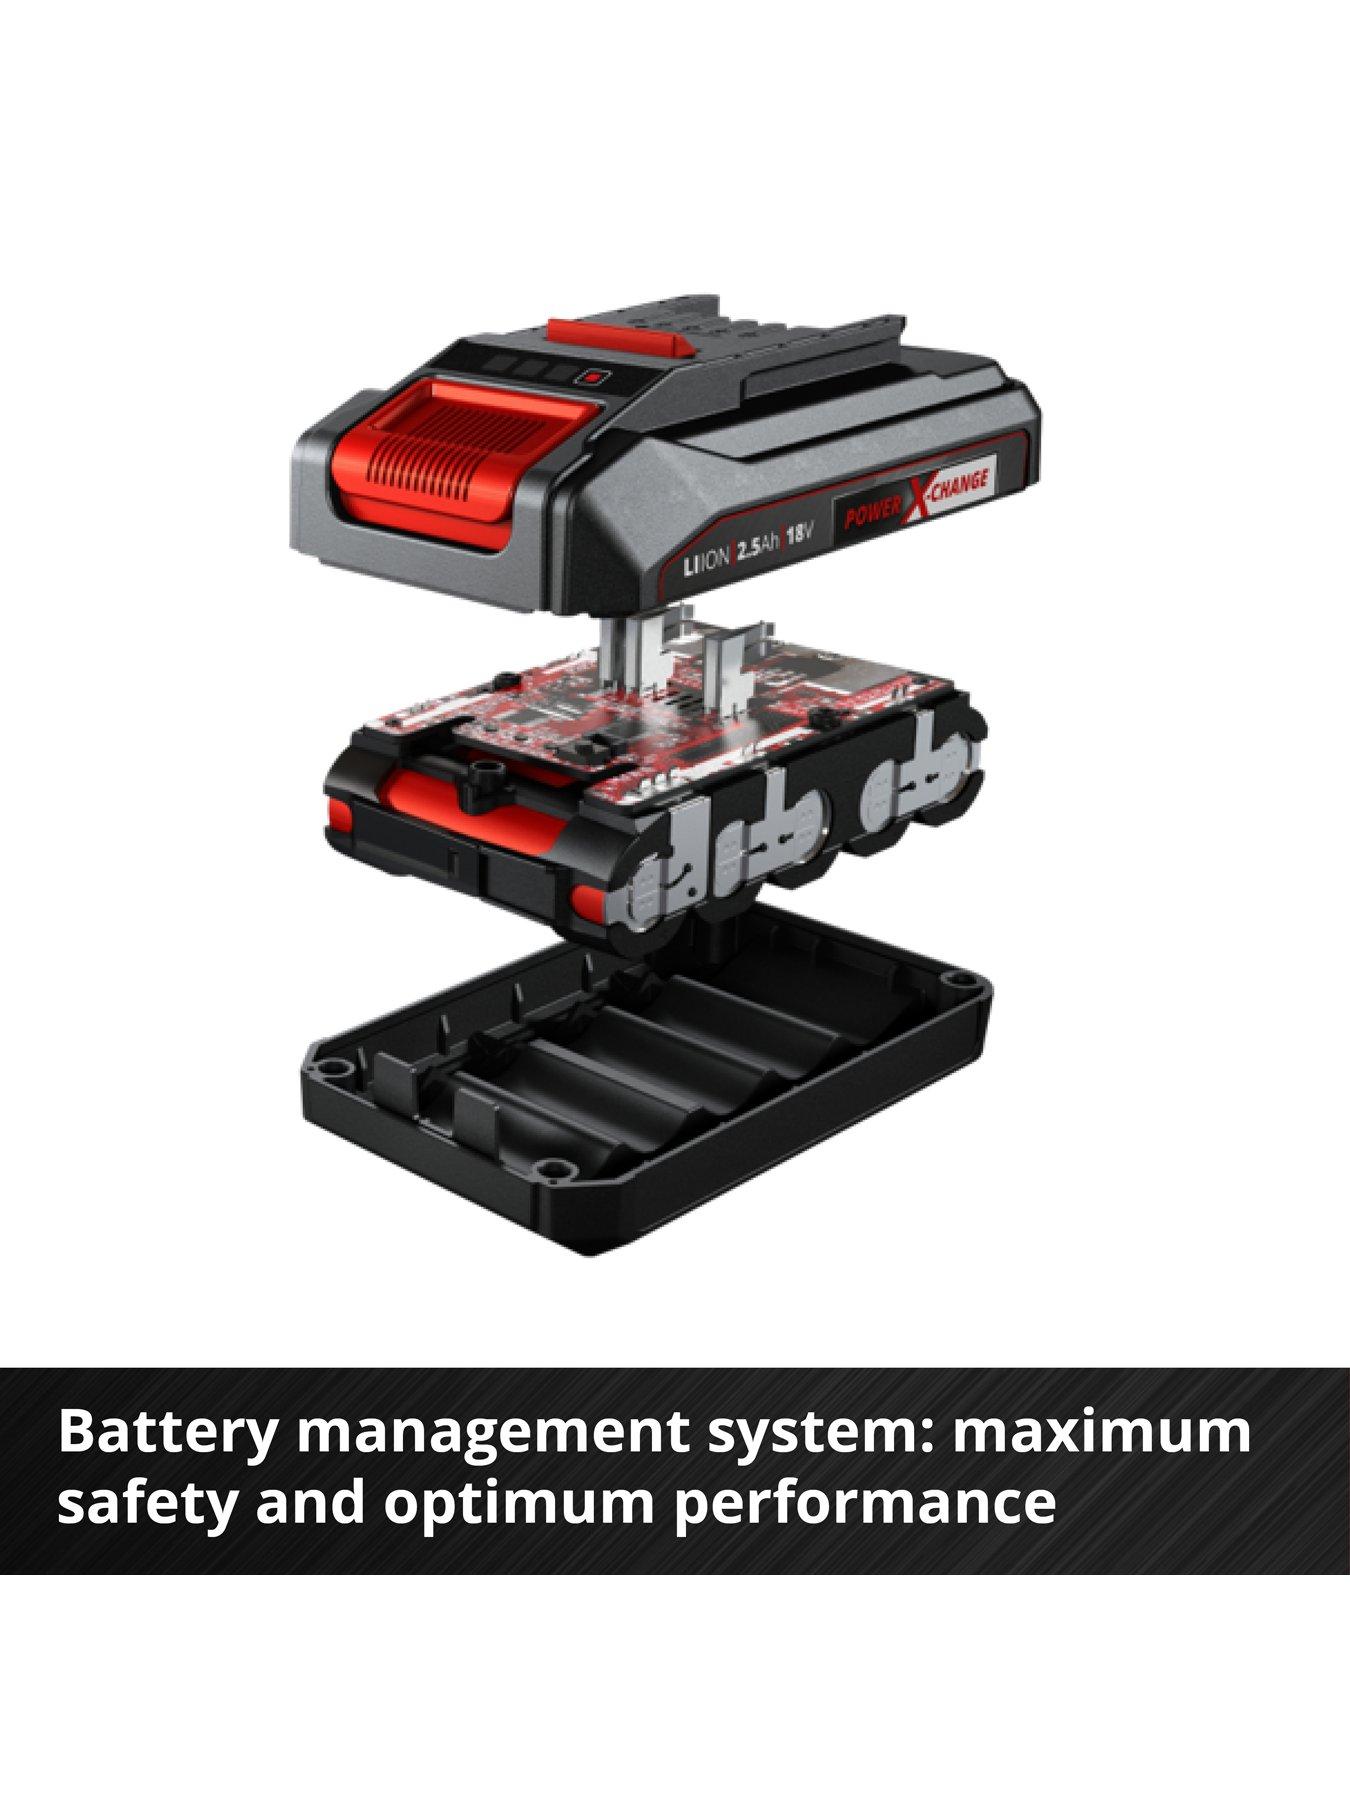 Einhell PXC 18V 2.5Ah Starter Kit - Battery and Charger